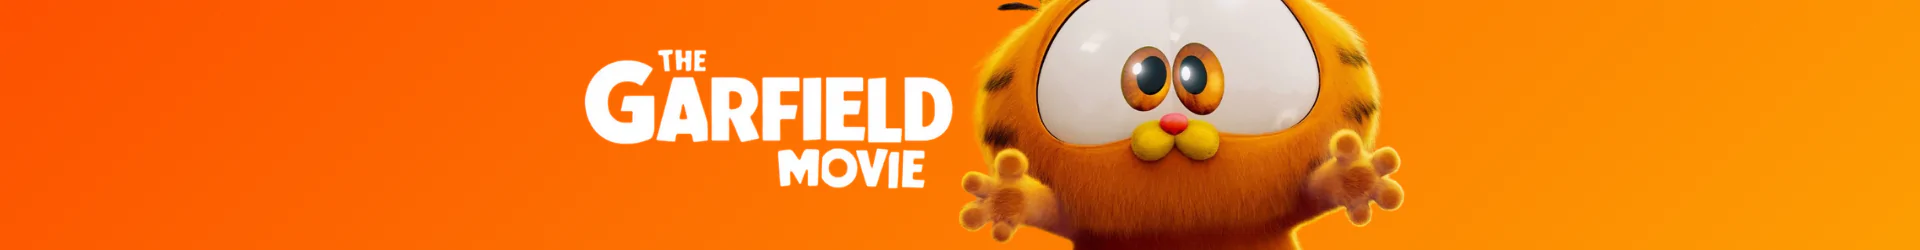 Garfield plushes banner